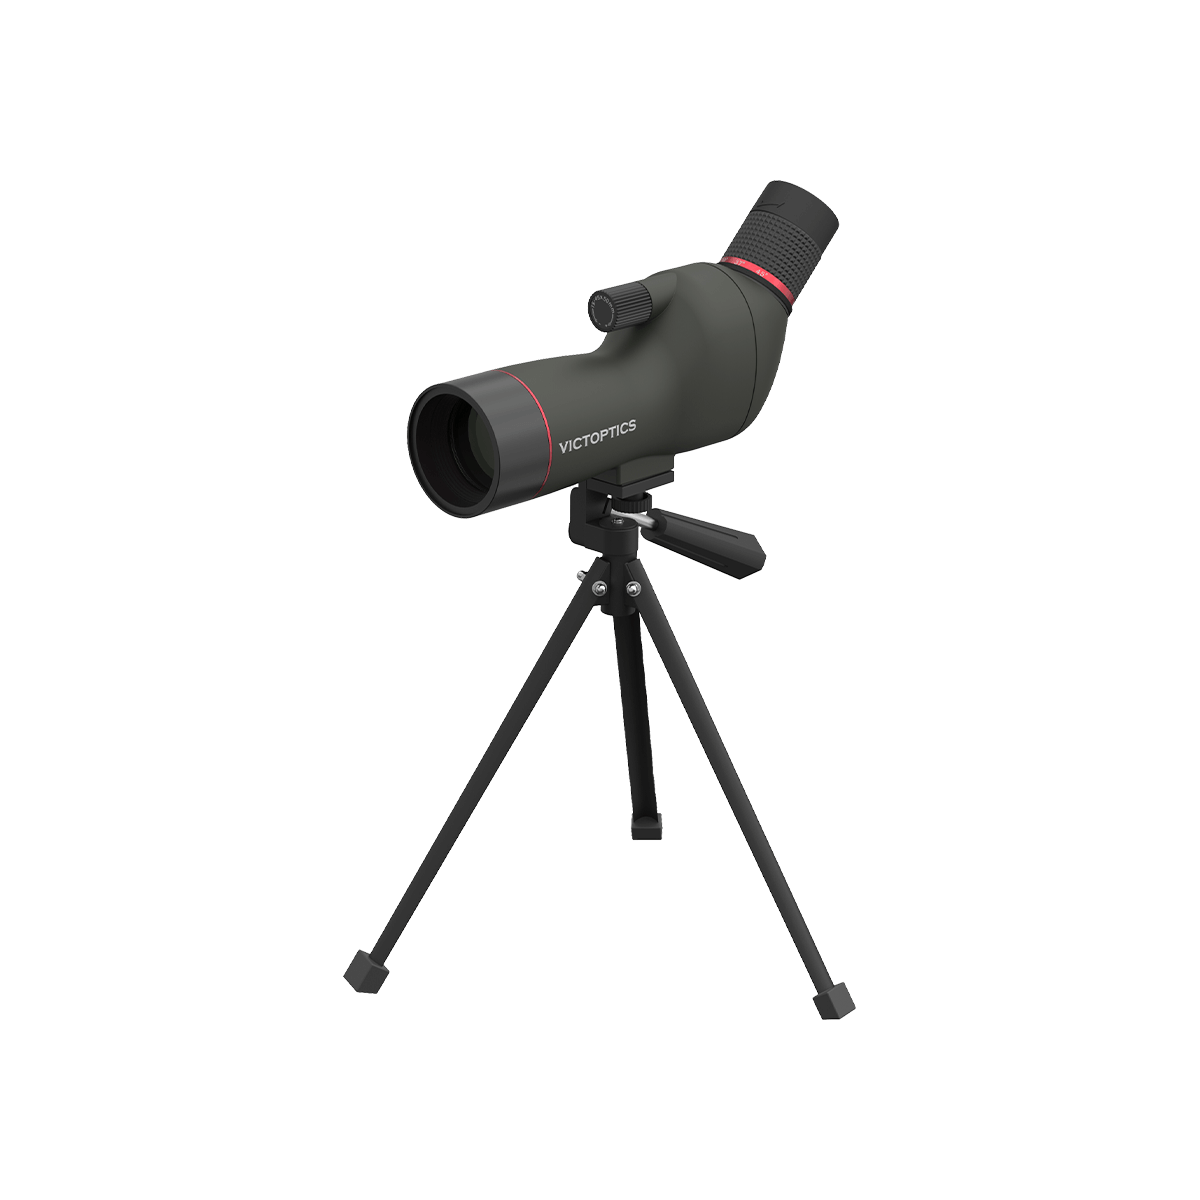 SSSL01 15-45x50 spotting scope with tripod7